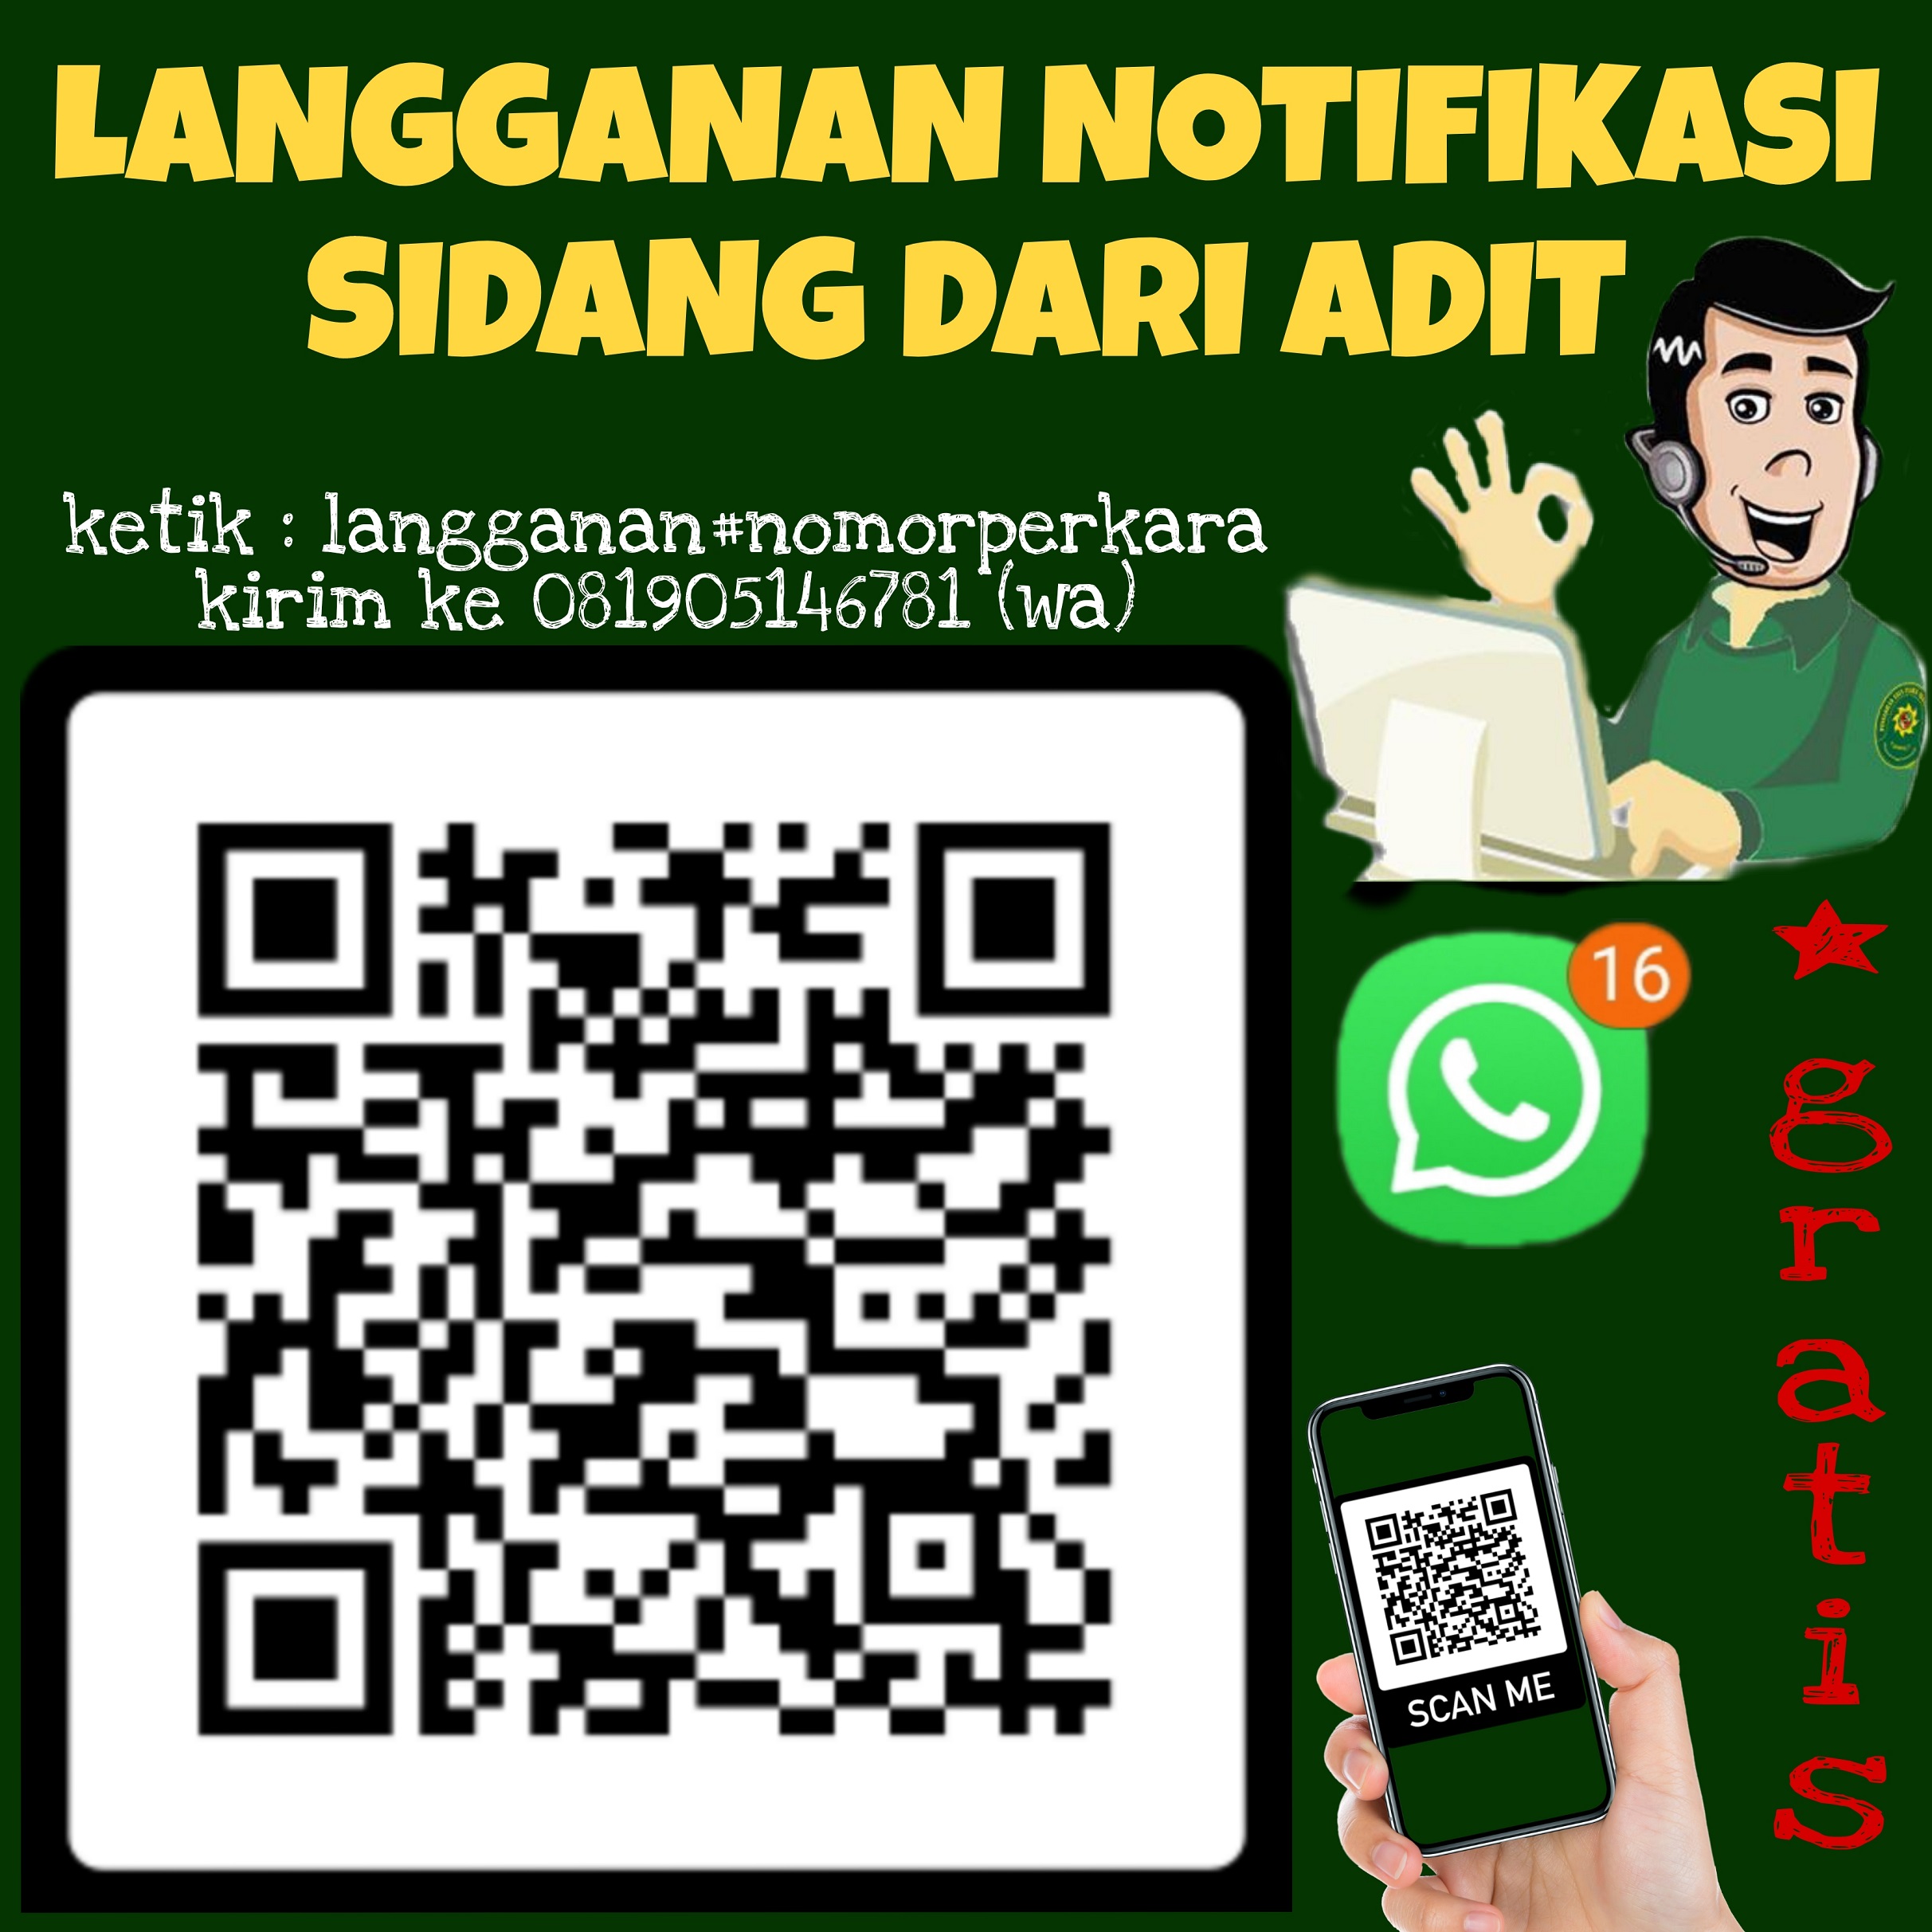 ADiT (Asisten Digital Terintegrasi) PTUN Mataram